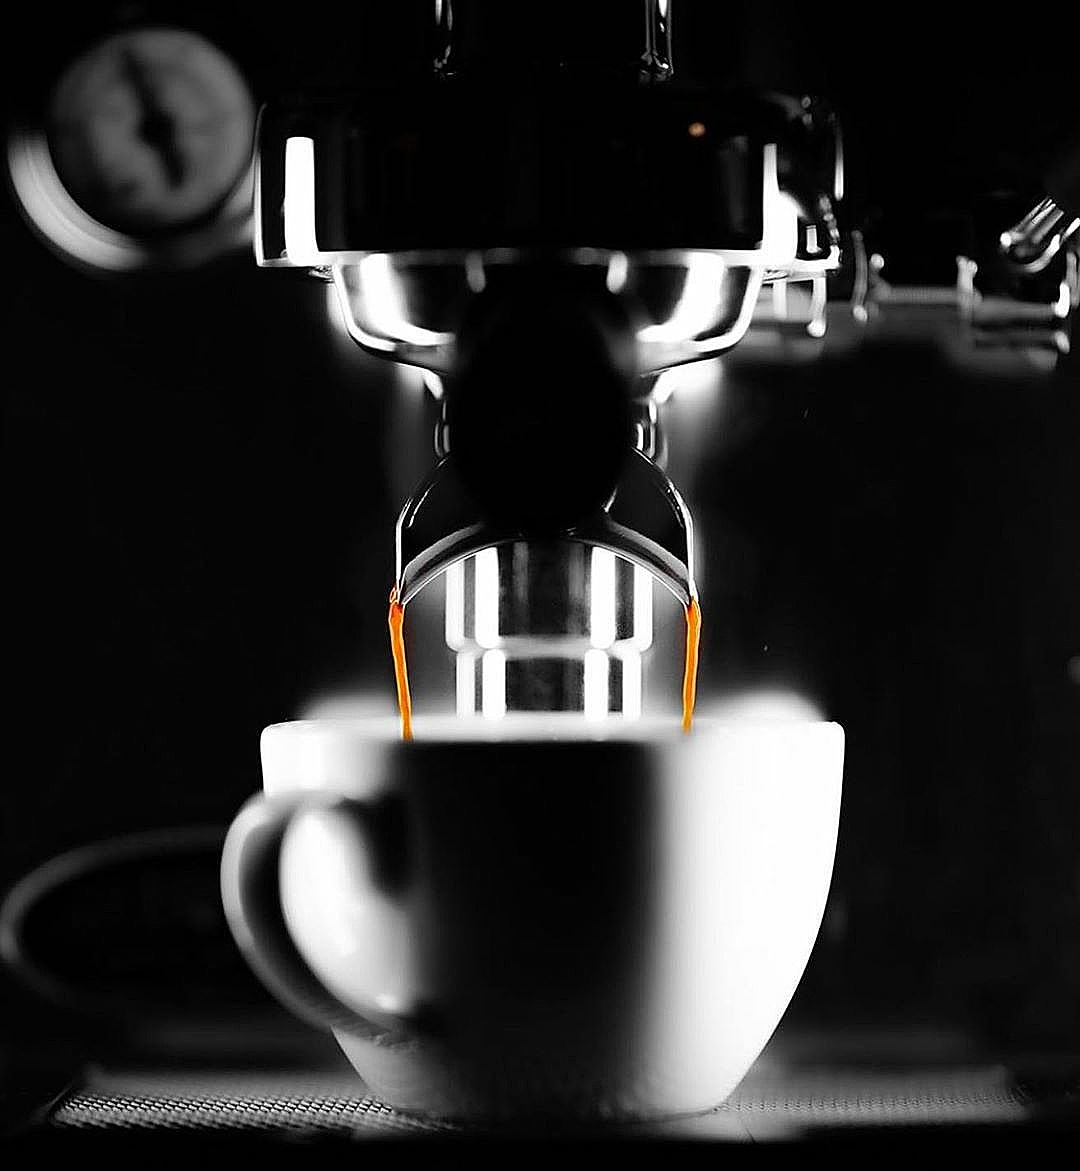 Regulando ☕

IG: coffeeprops